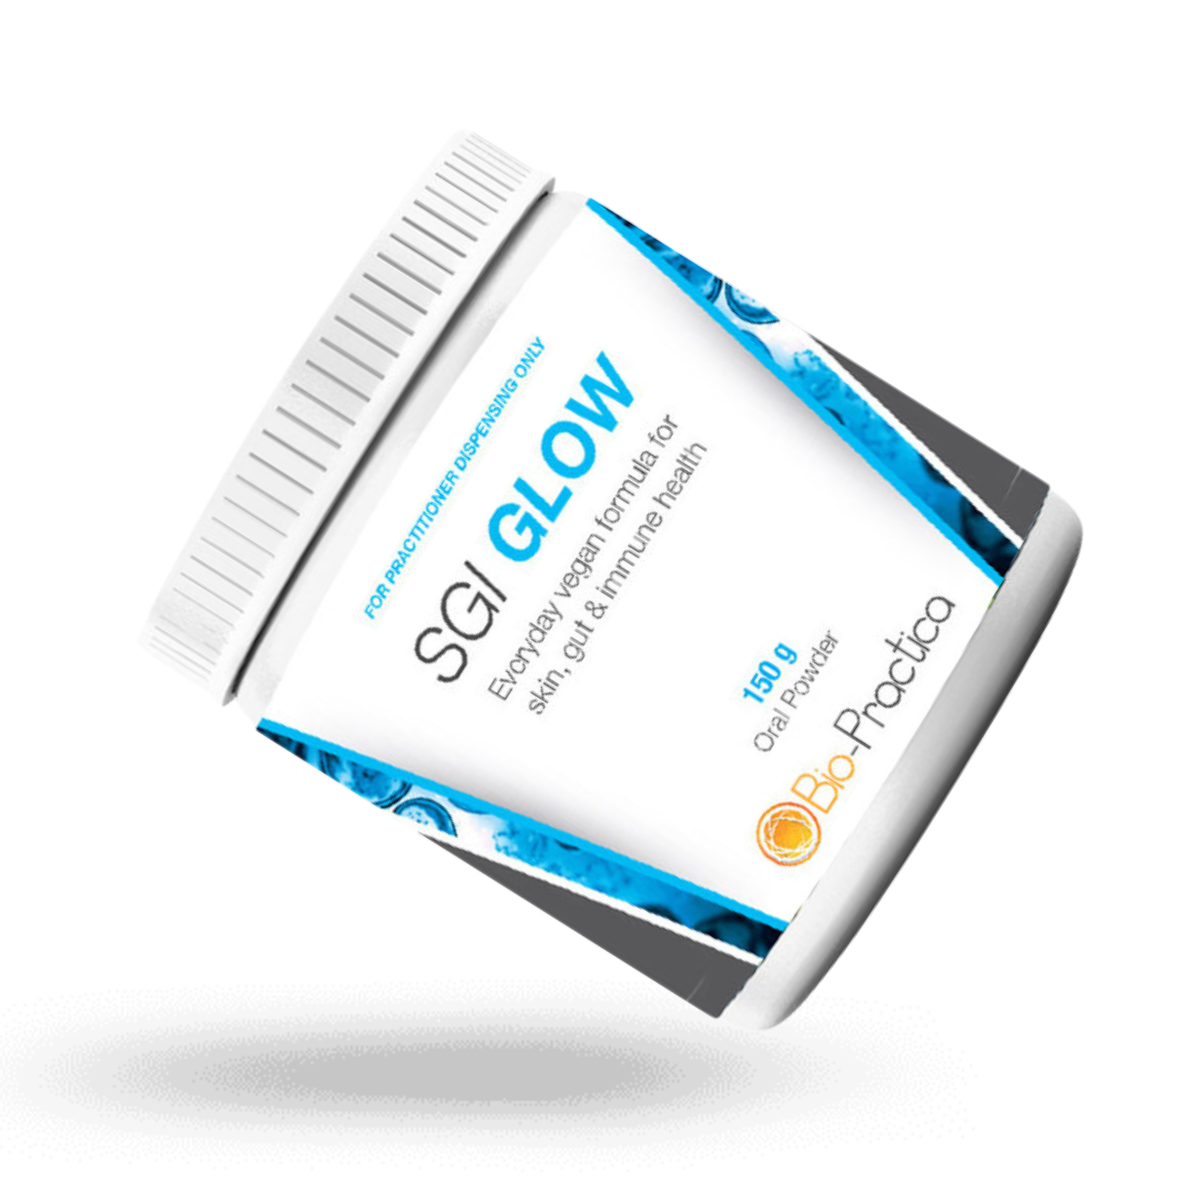 Bio-Practica SGI Glow Oral Powder 150g